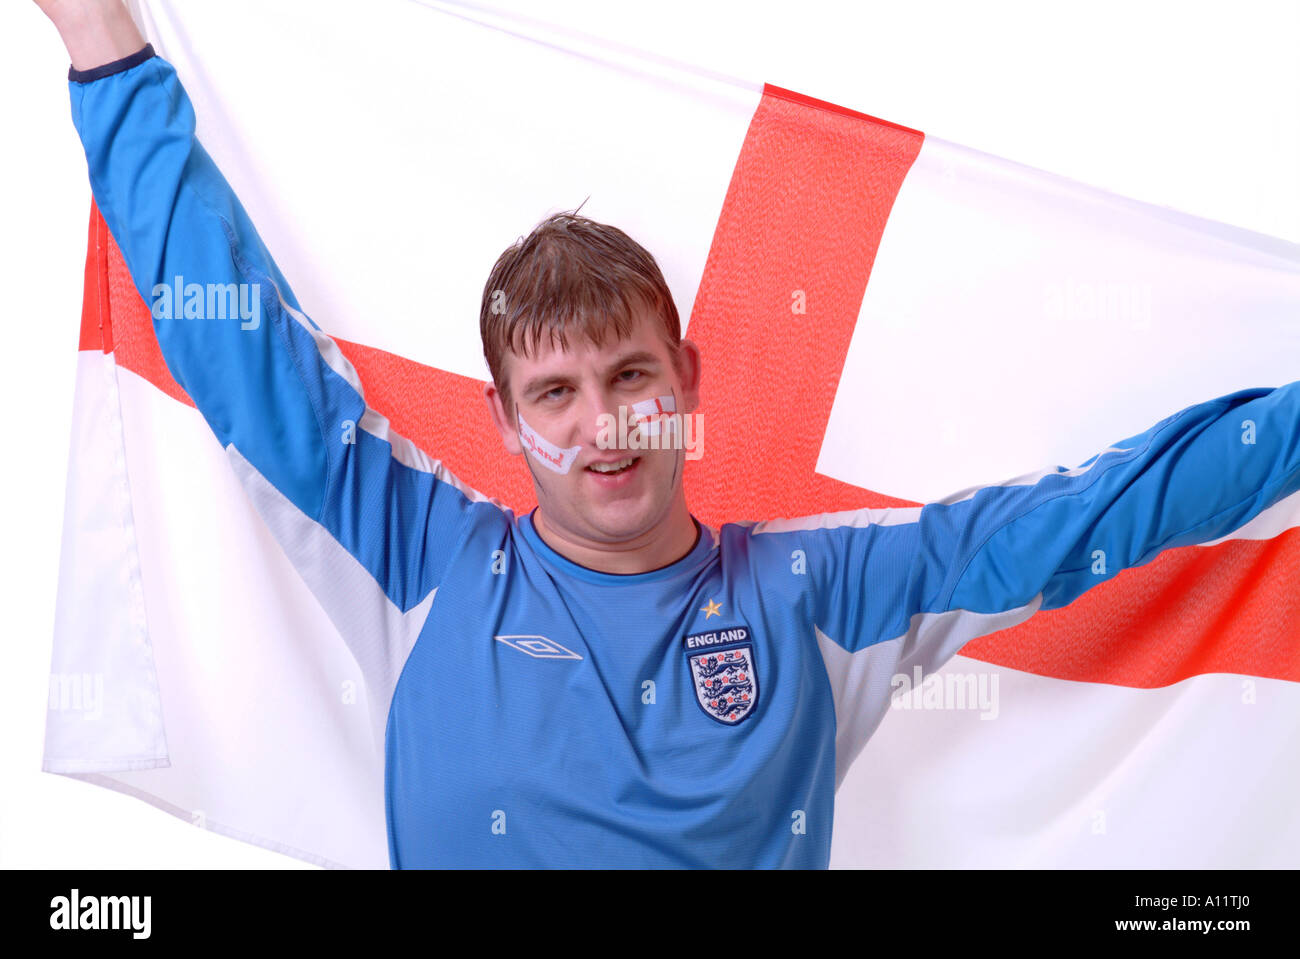 england football fan Stock Photo